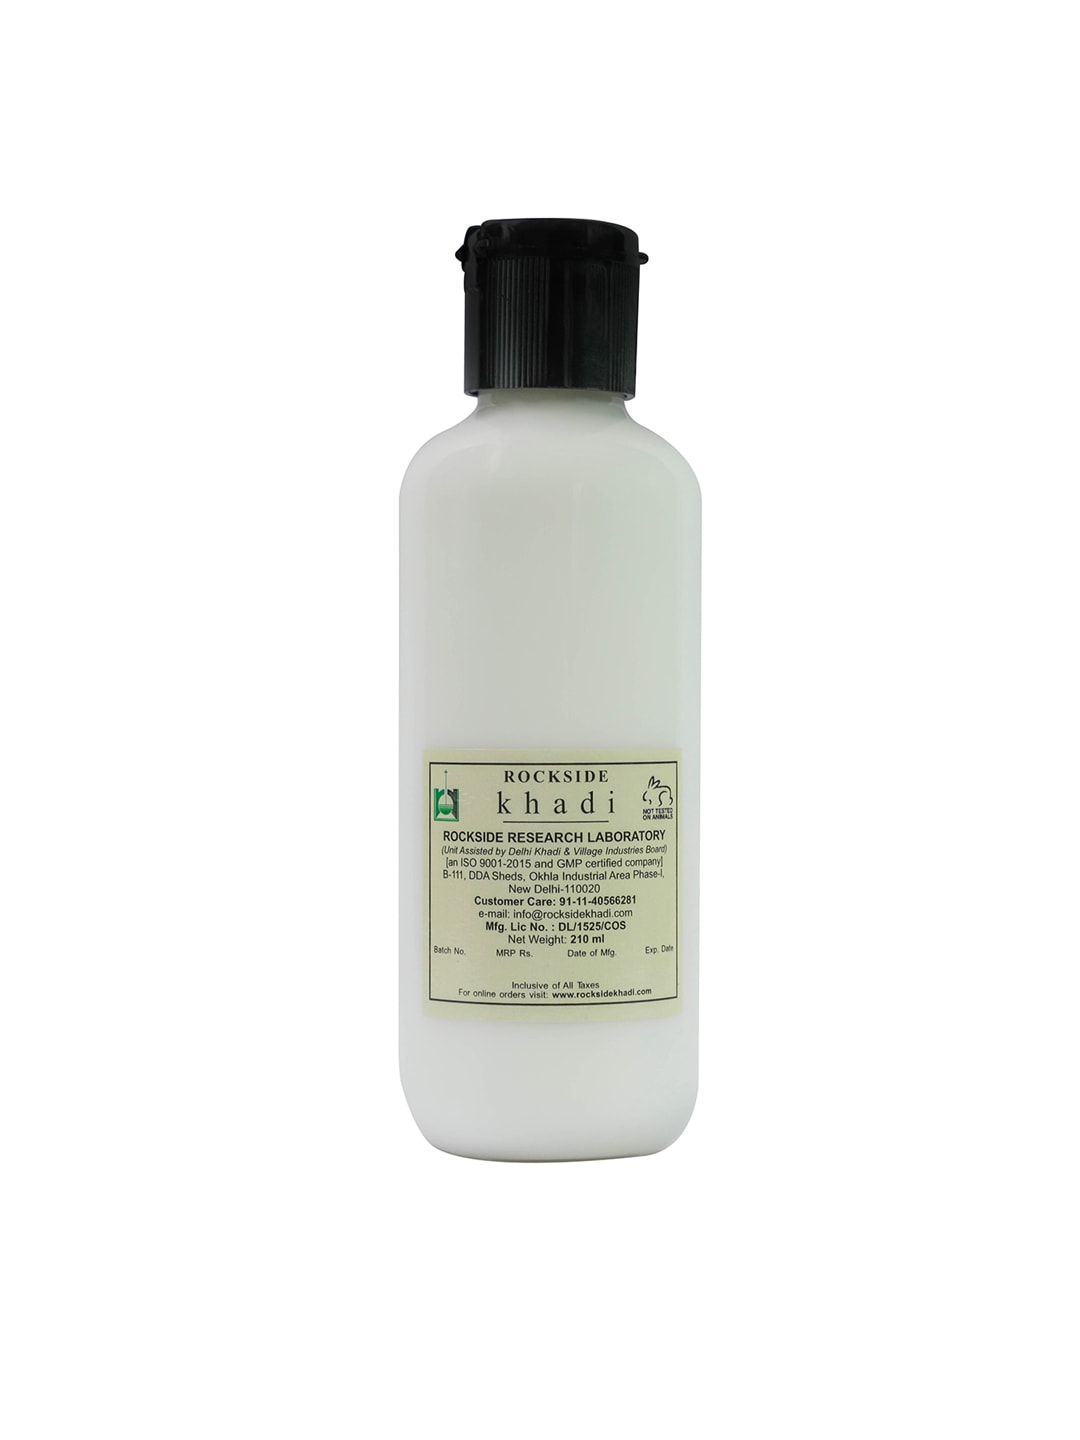 ROCKSIDE KHADI Vanilla & Honey Herbal Hair Conditioner, 210 ml Price in India